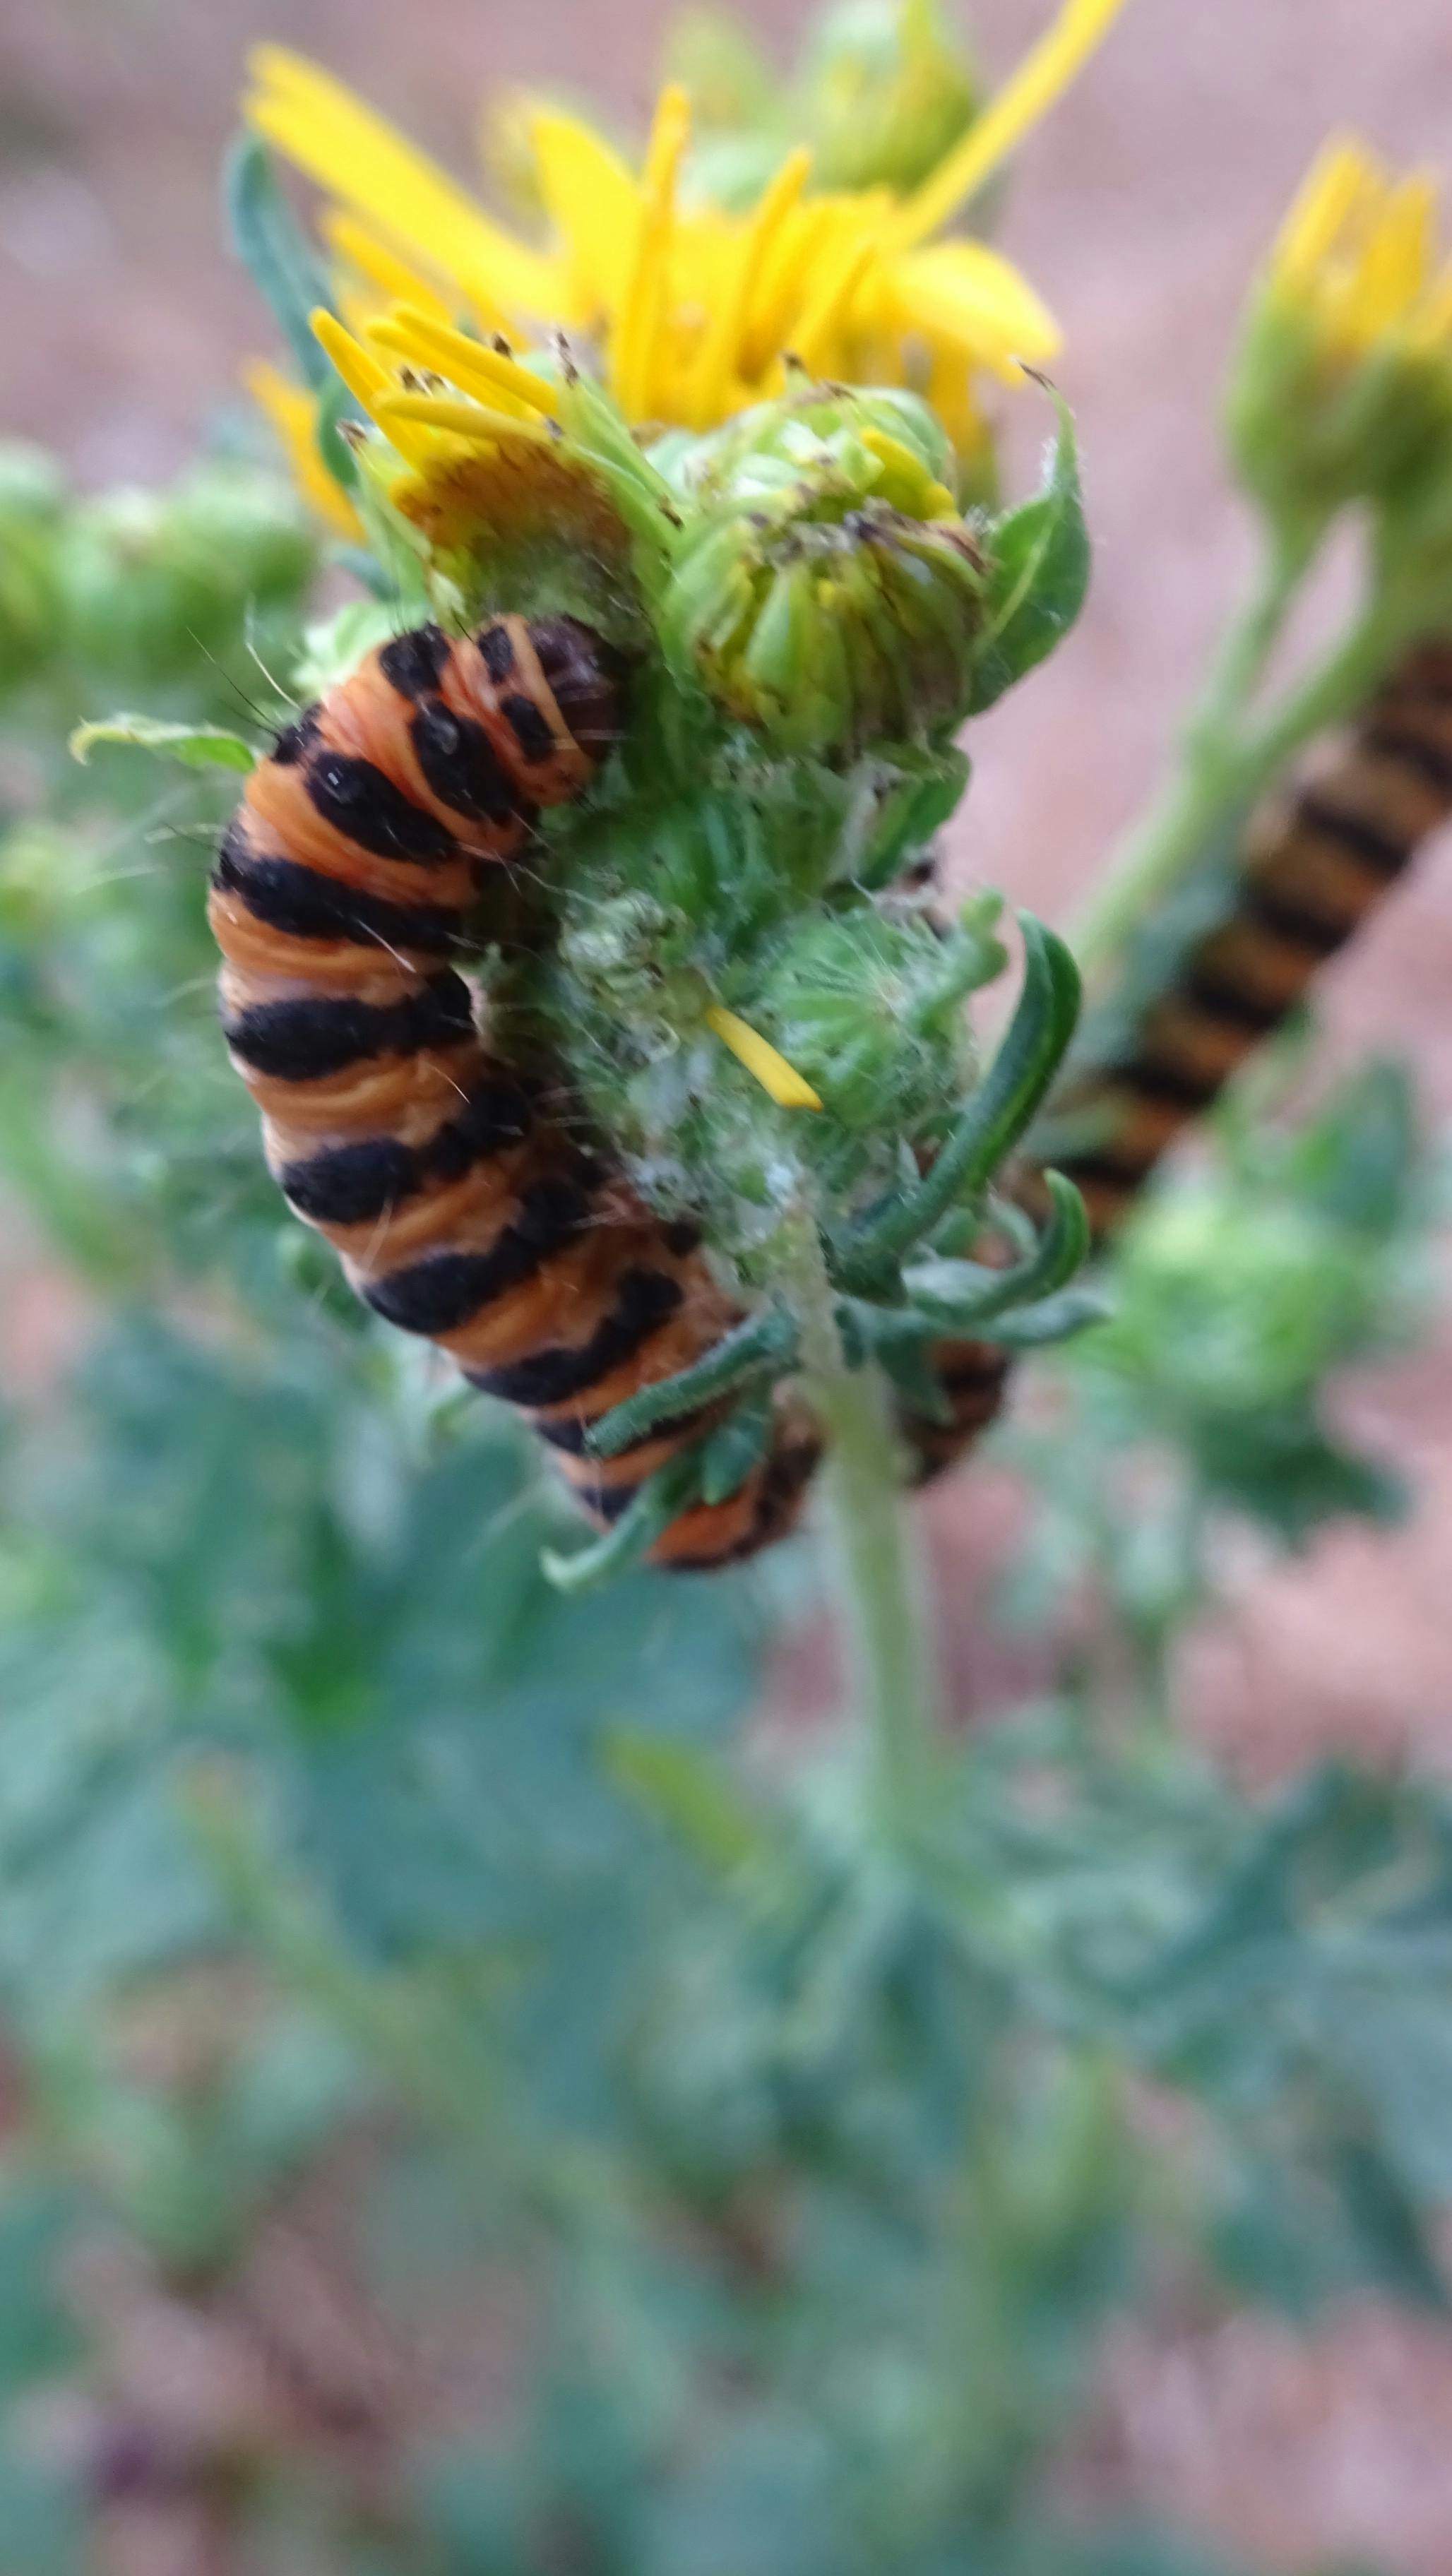 Free stock photo of caterpillar, nature photography, wildlife